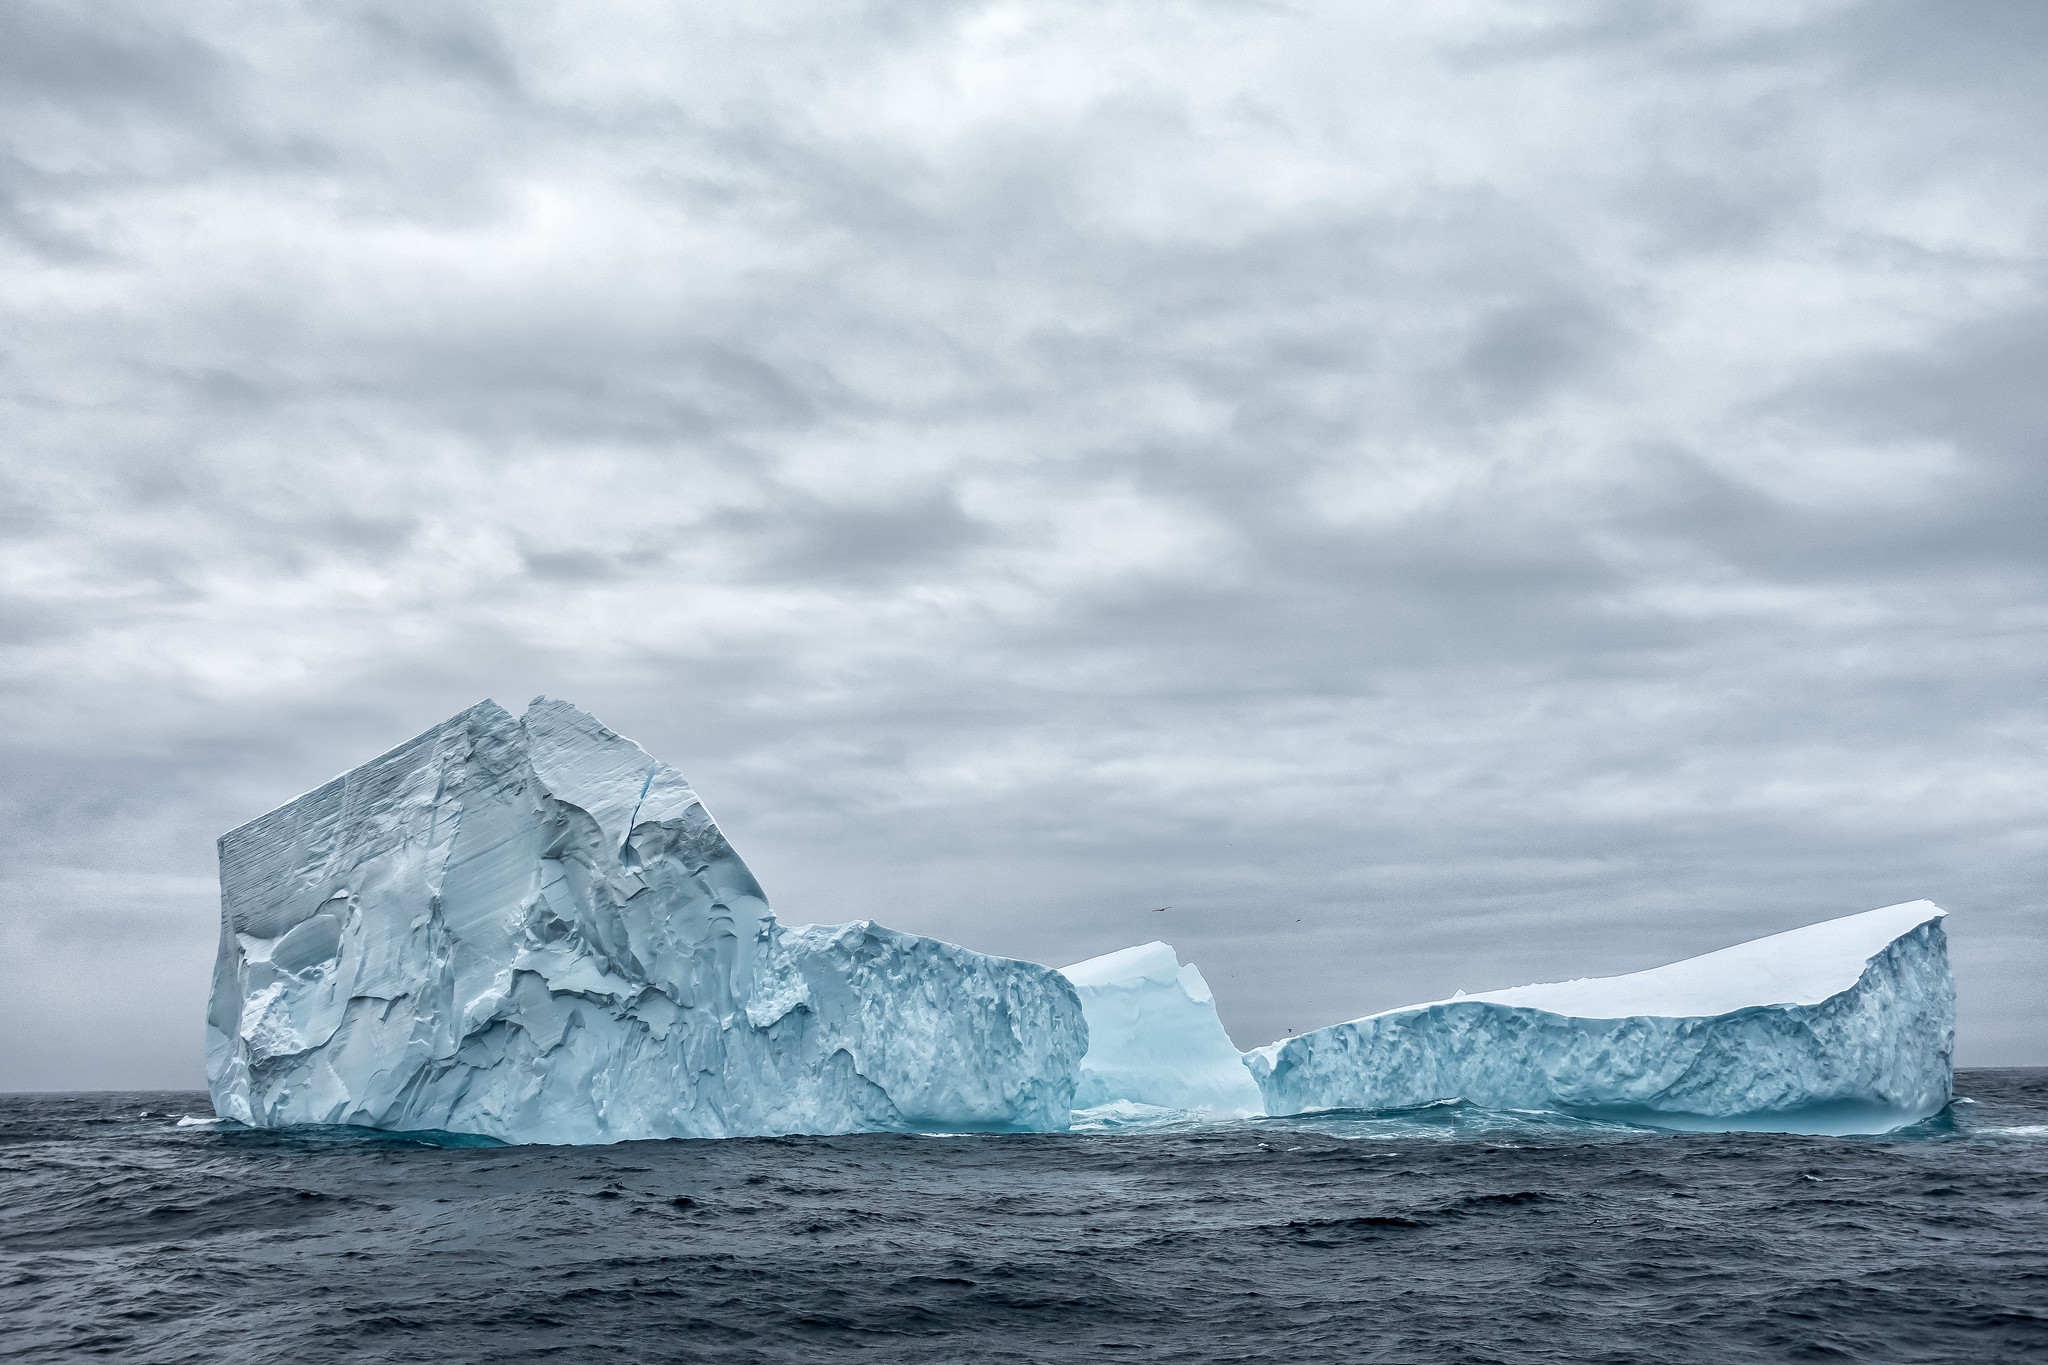 “Iceberg” © Kyle Mortara; Creative Commons license